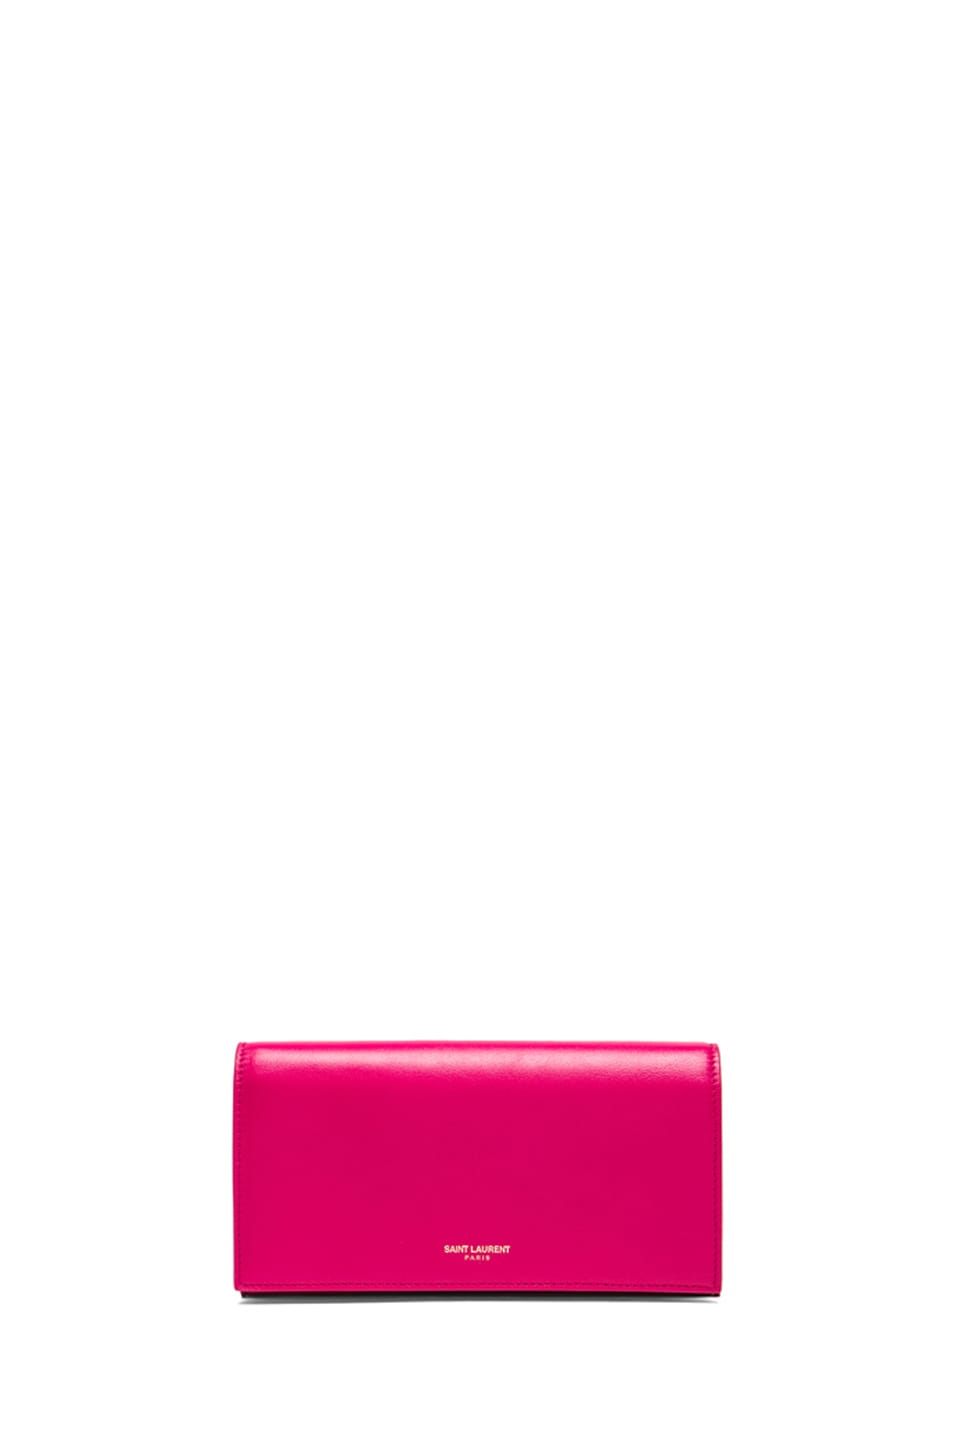 Saint Laurent Large Flap Wallet in Lipstick Fuchsia | FWRD